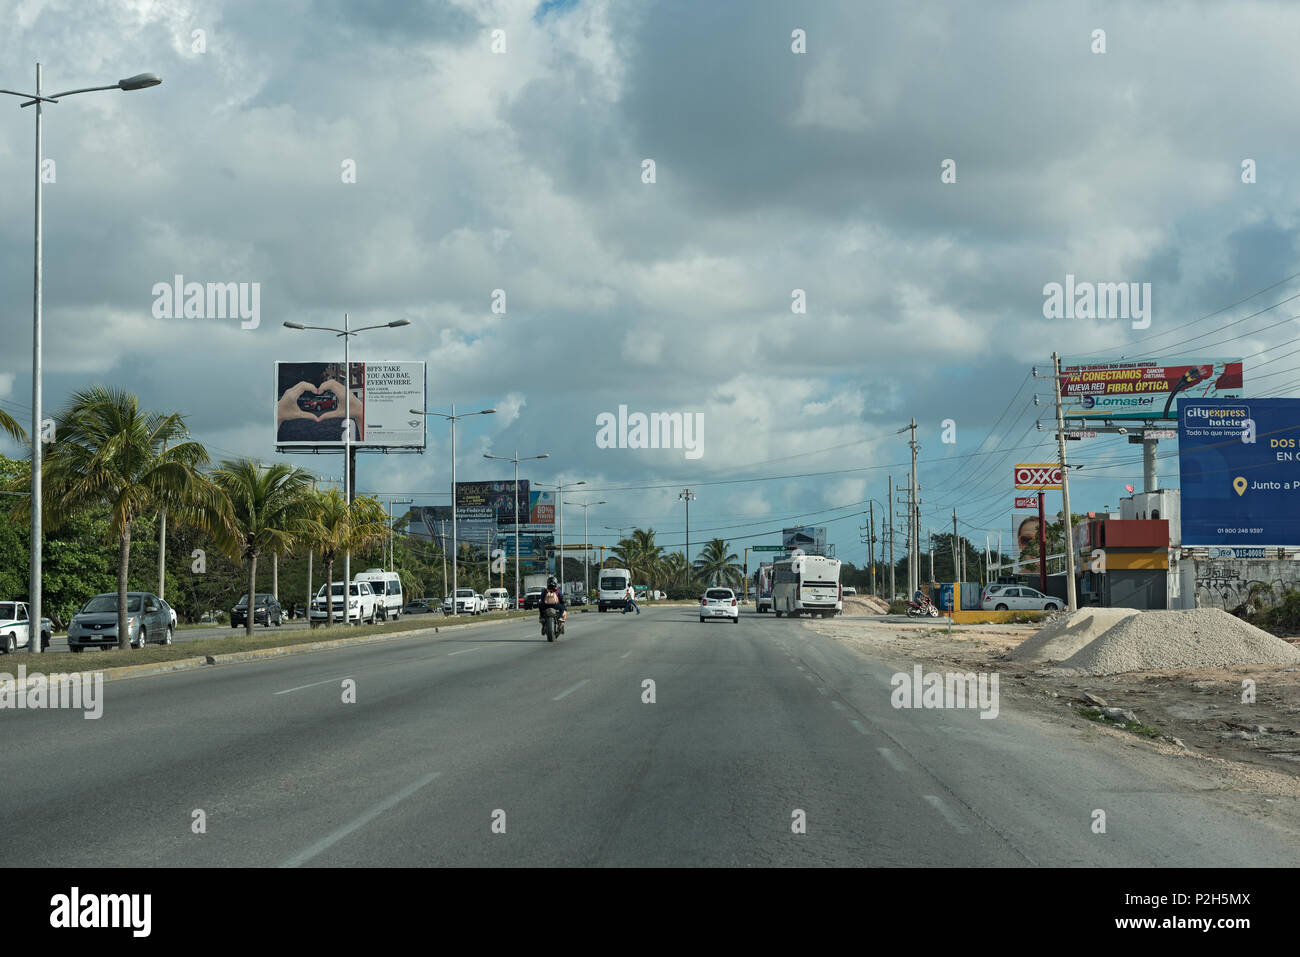 Traffic on the main street Carretera Tulum-Cancun, Mexico Stock Photo